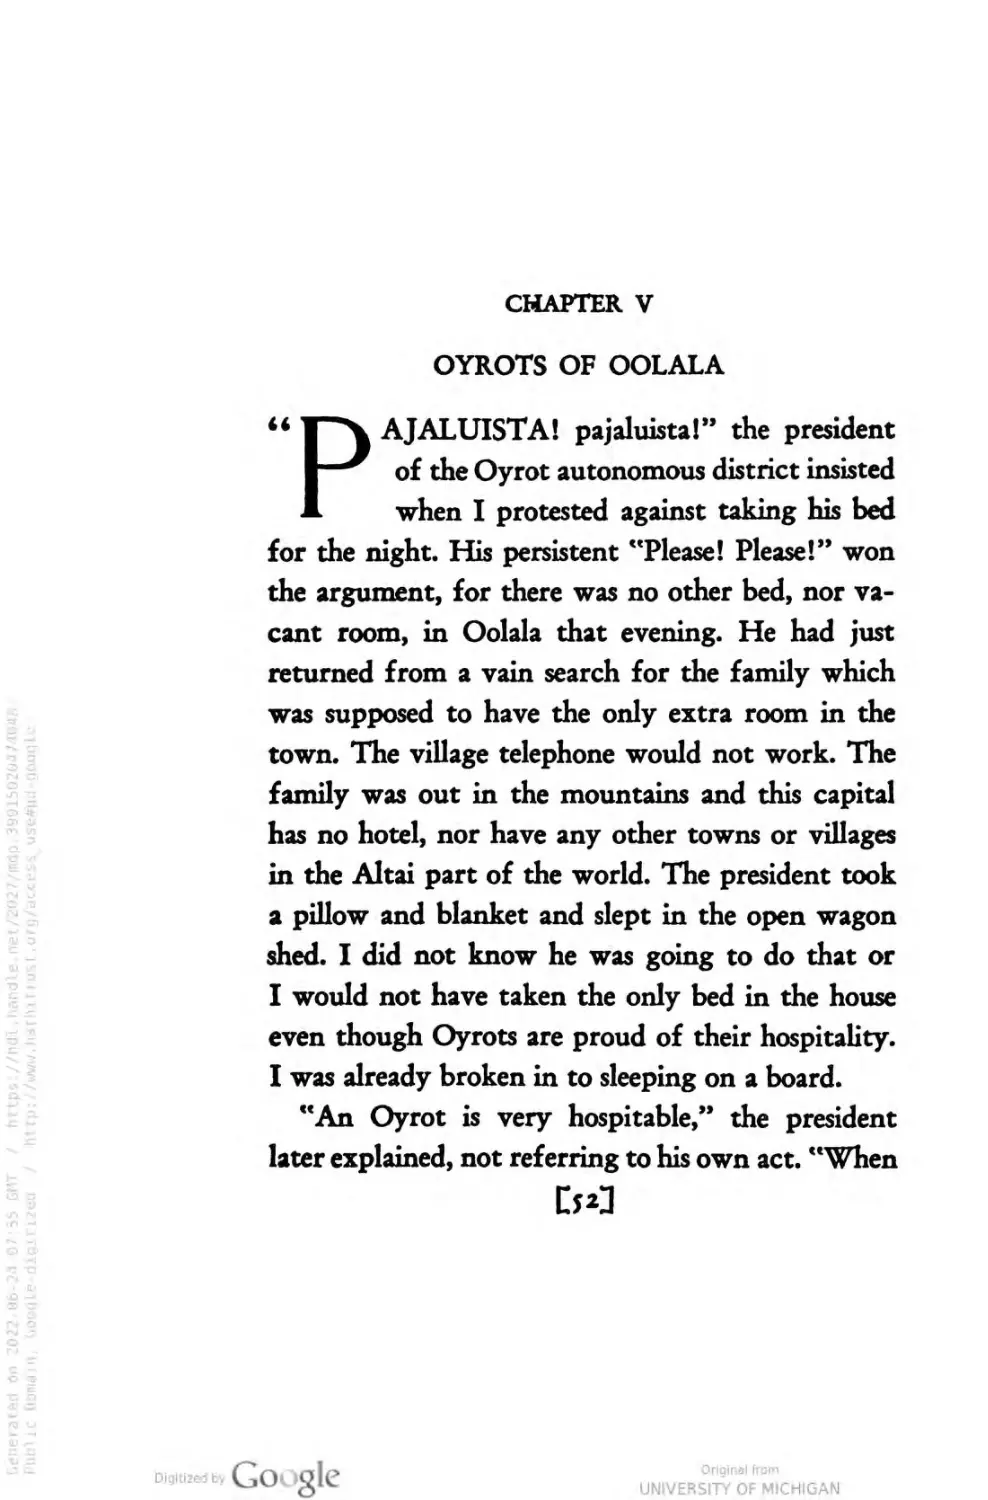 CHAPTER V. OYROTS OF OOLALA